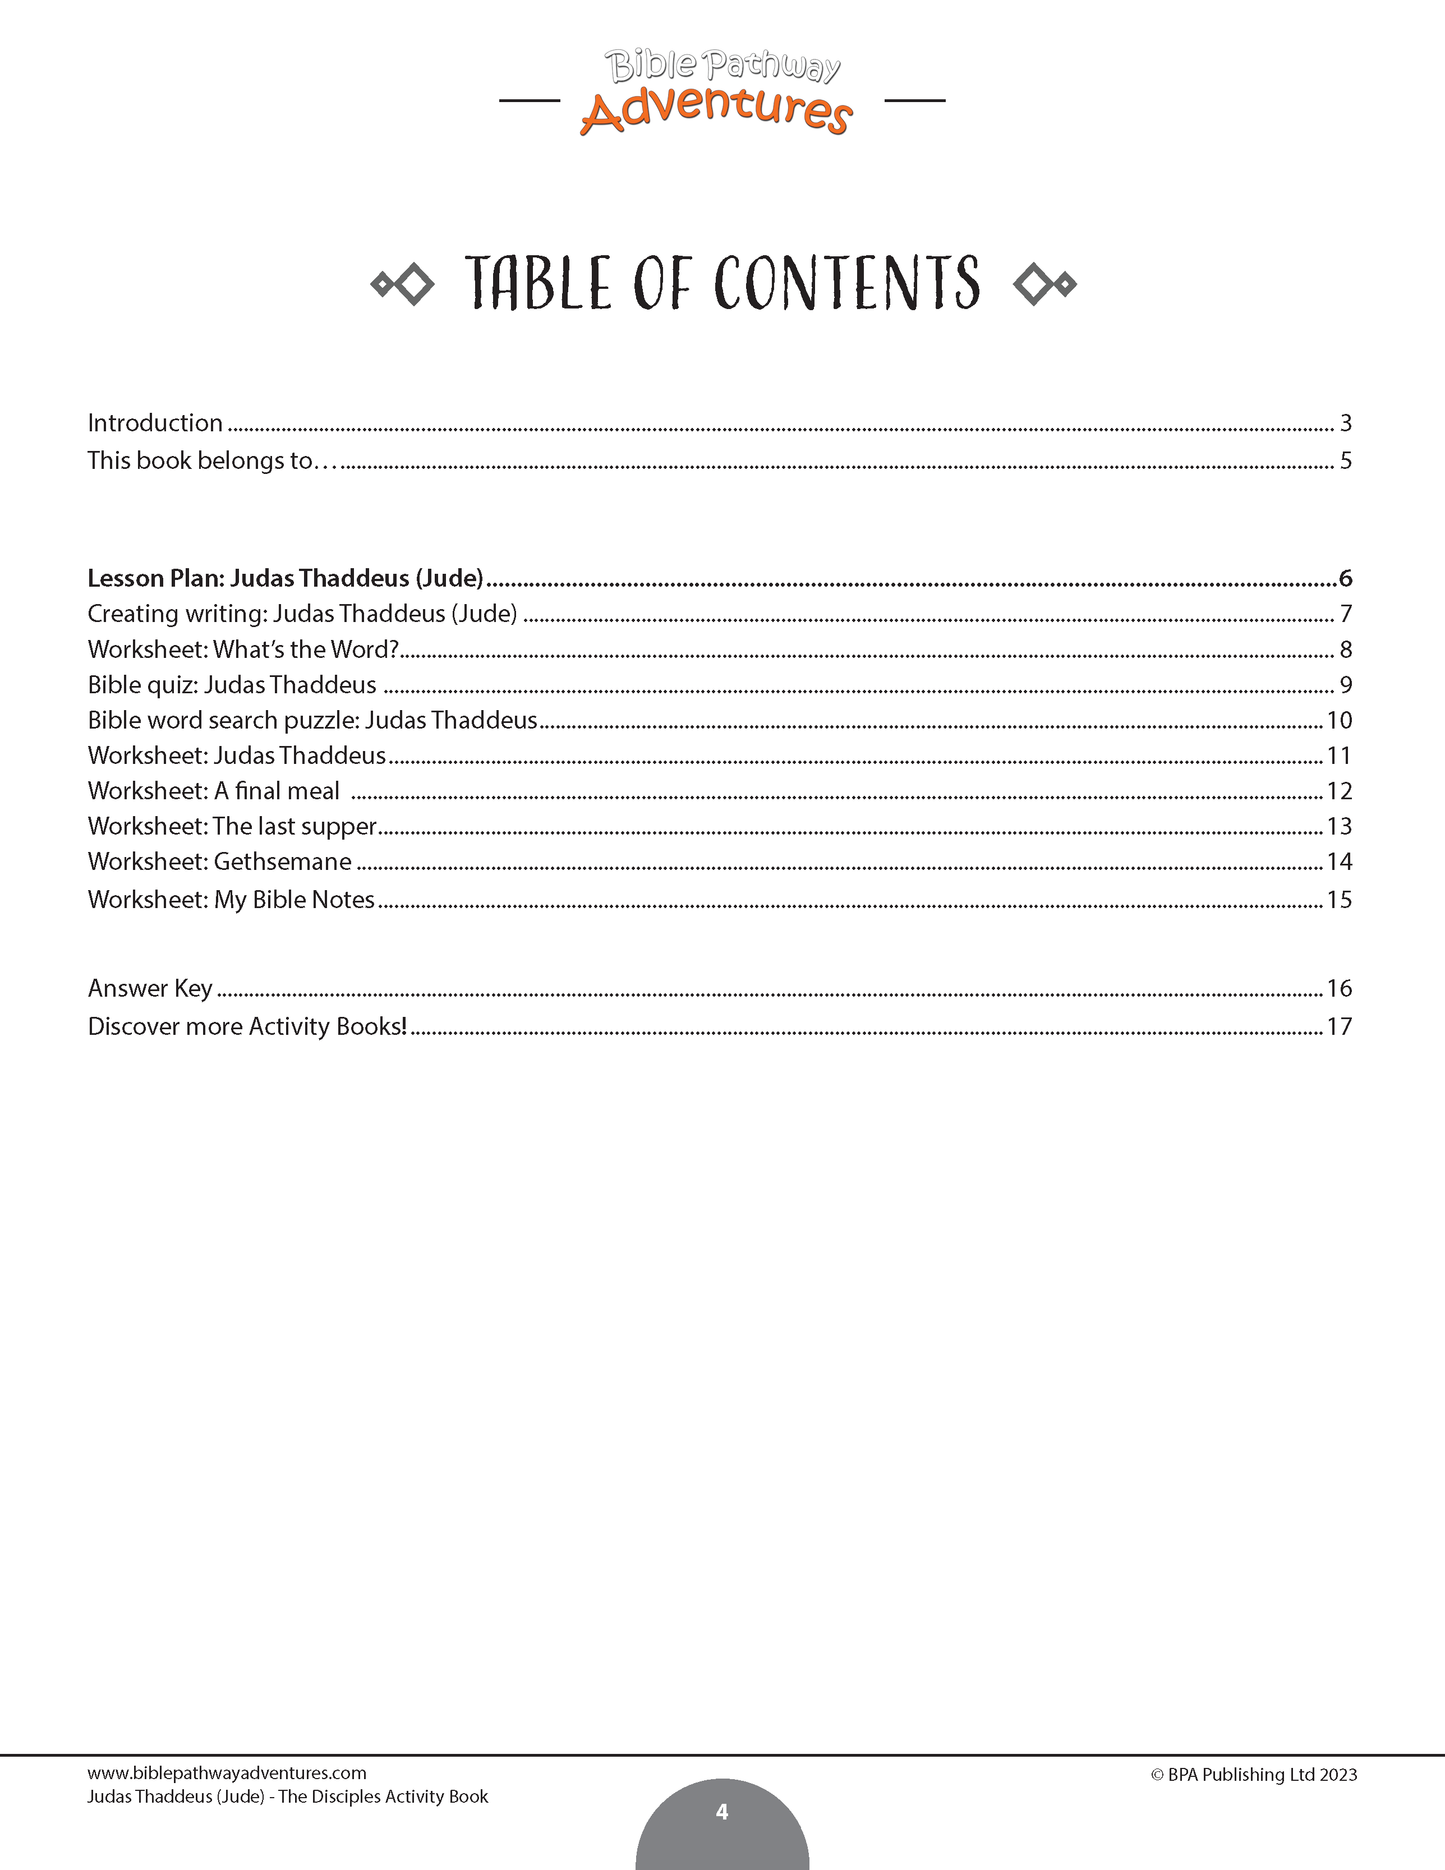 Judas Thaddeus (Jude): The Disciple Activity Book (PDF)